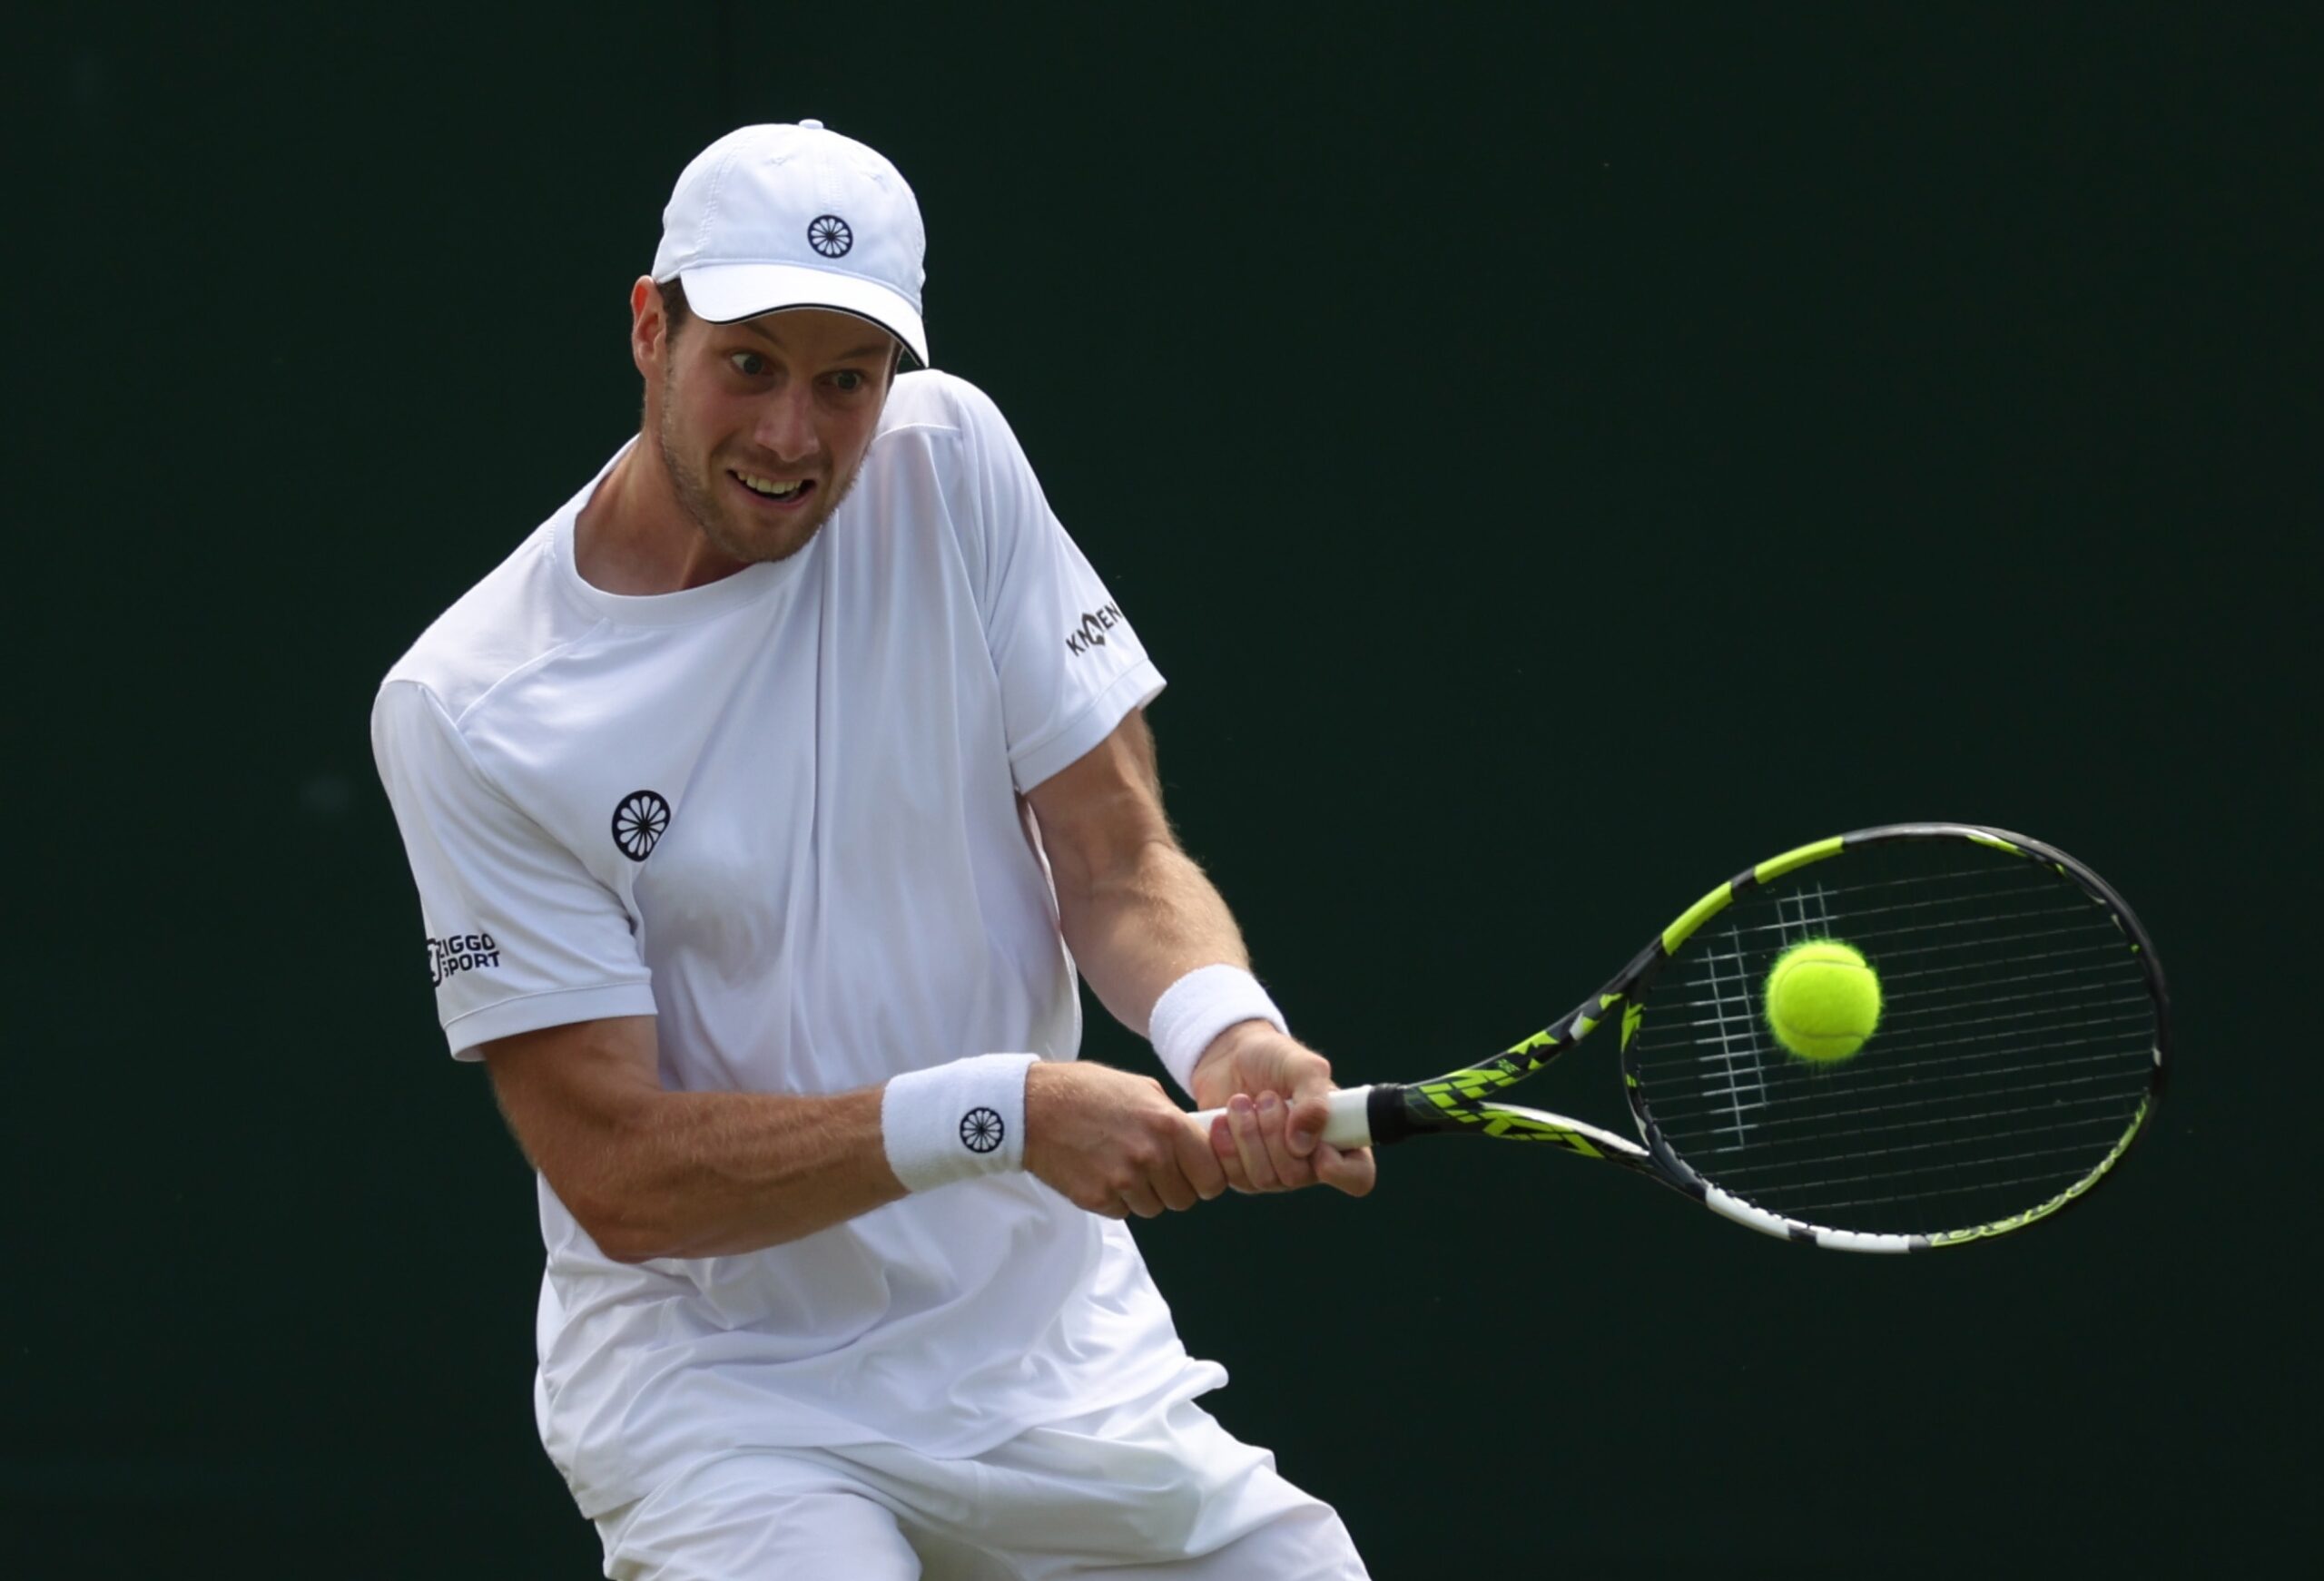 Van de Zandschulp wins in five sets to reach R2 at Wimbledon